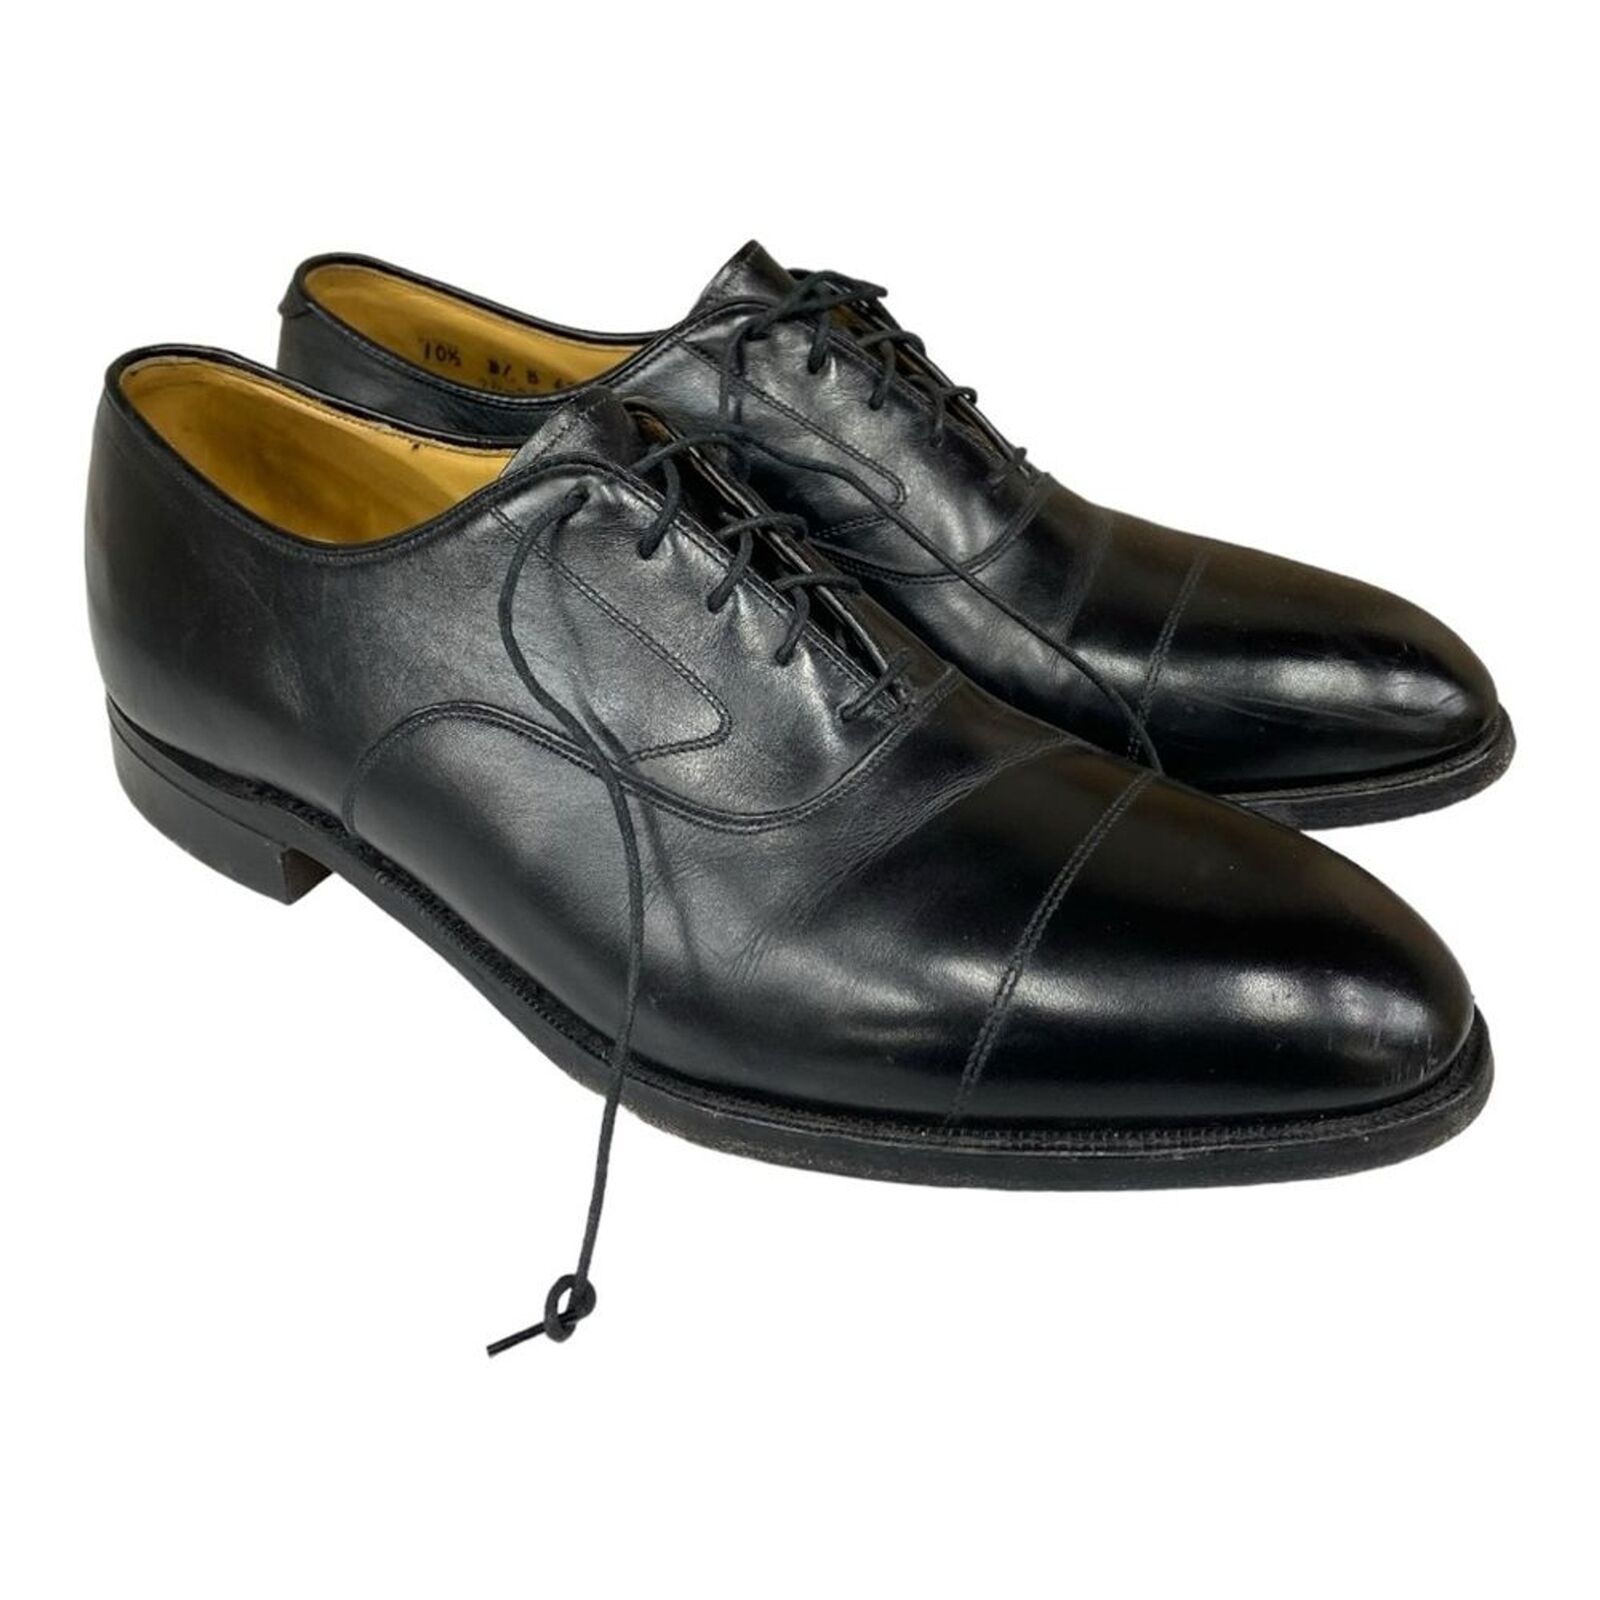 Johnston & Murphy Aristocraft Cap Toe Oxford Dress Shoes in Black 10.5